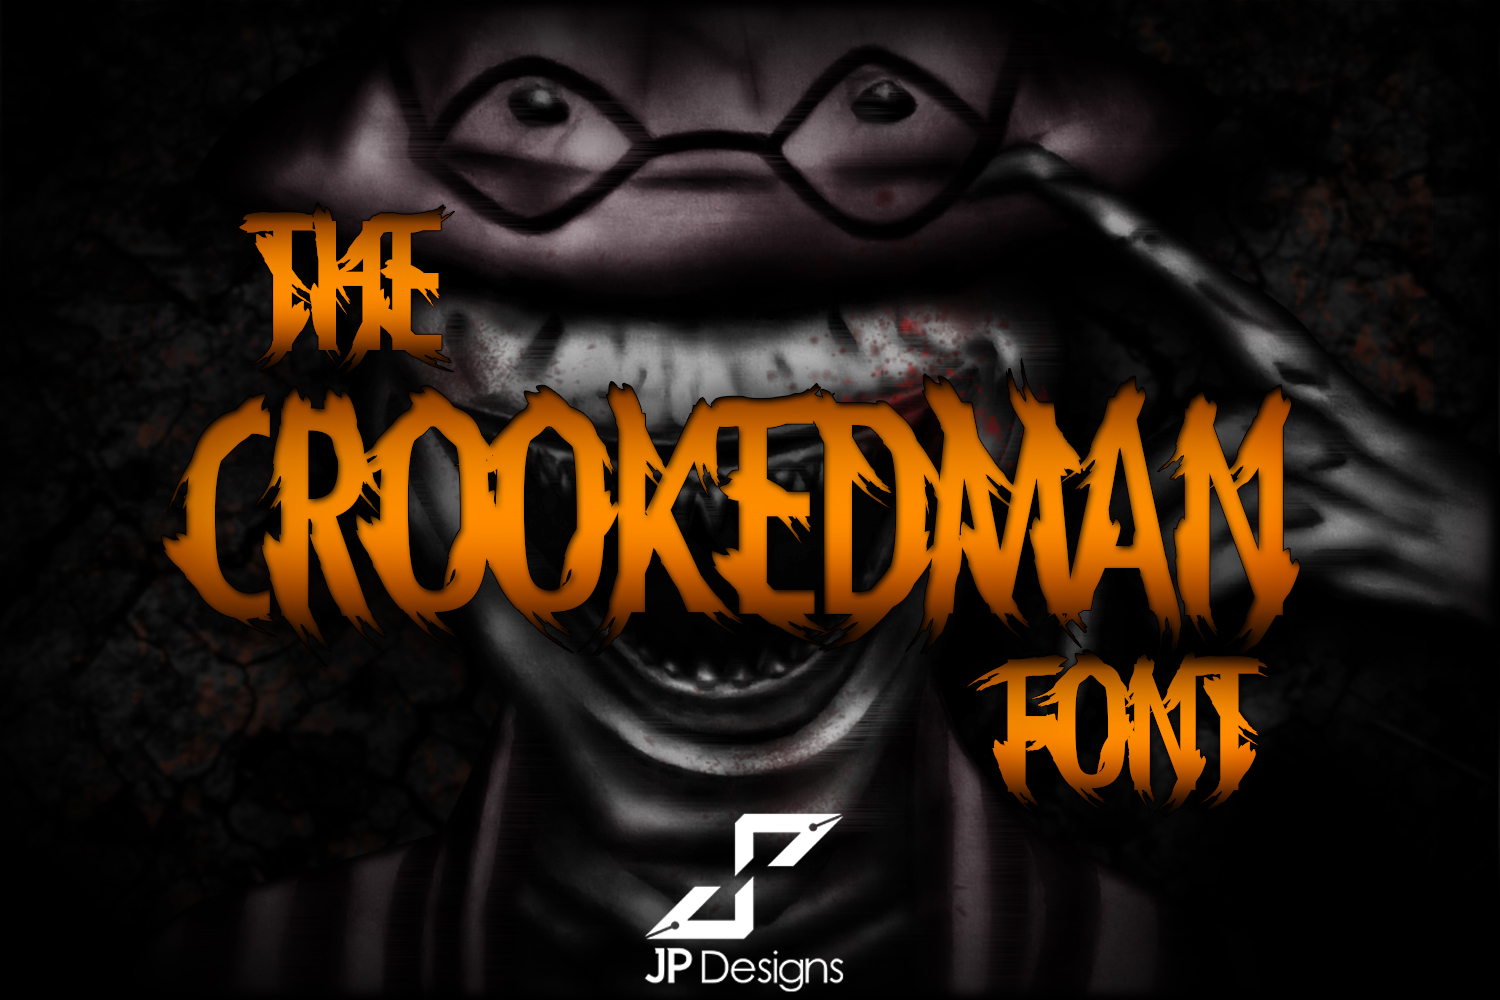 THE CROOKEDMAN DEMO